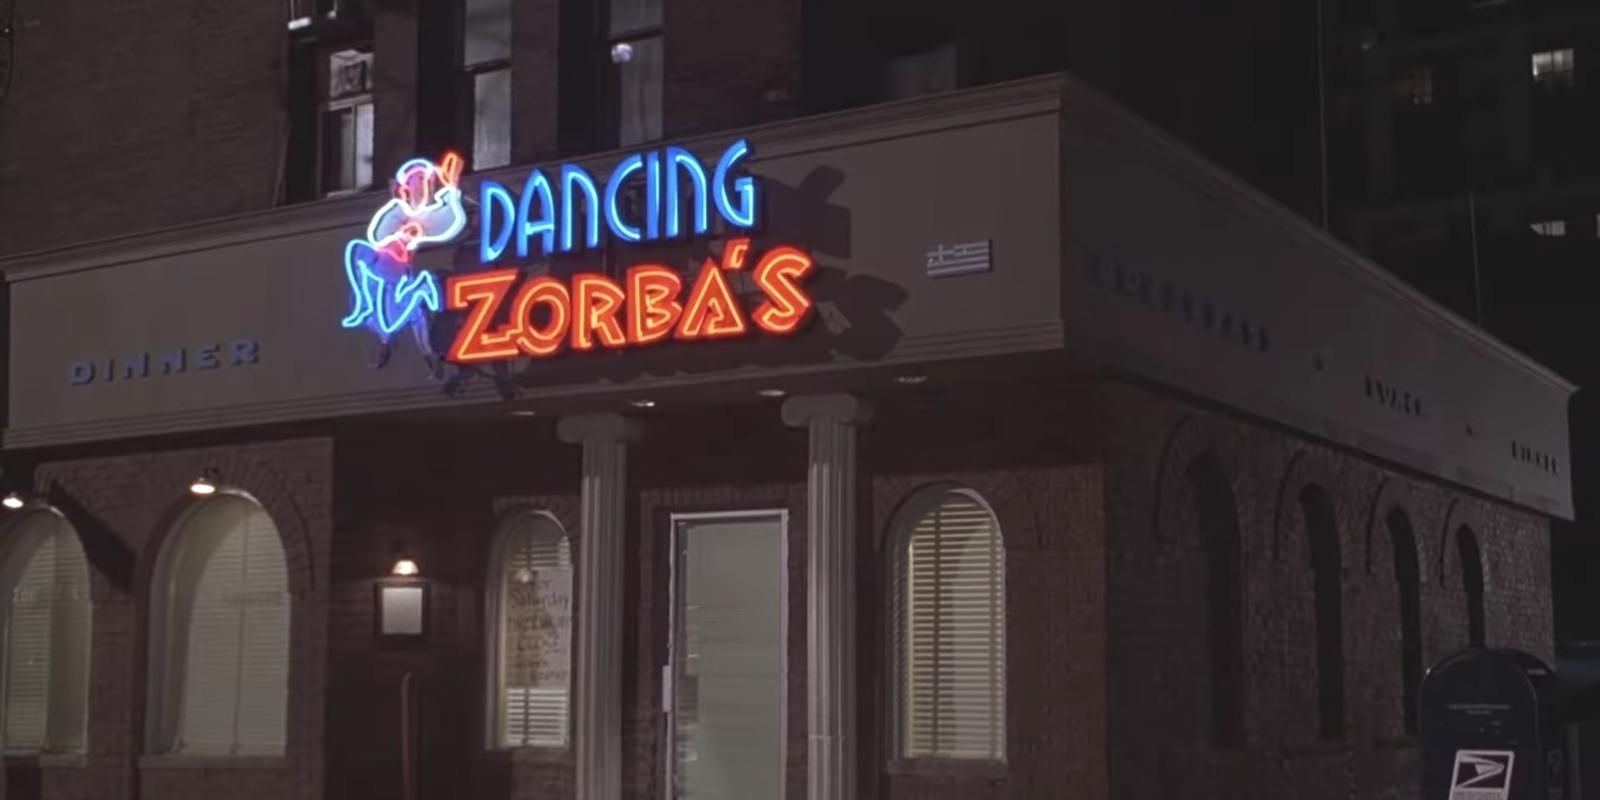 The Dancing Zorba's restaurant at night in My Big Fat Greek Wedding